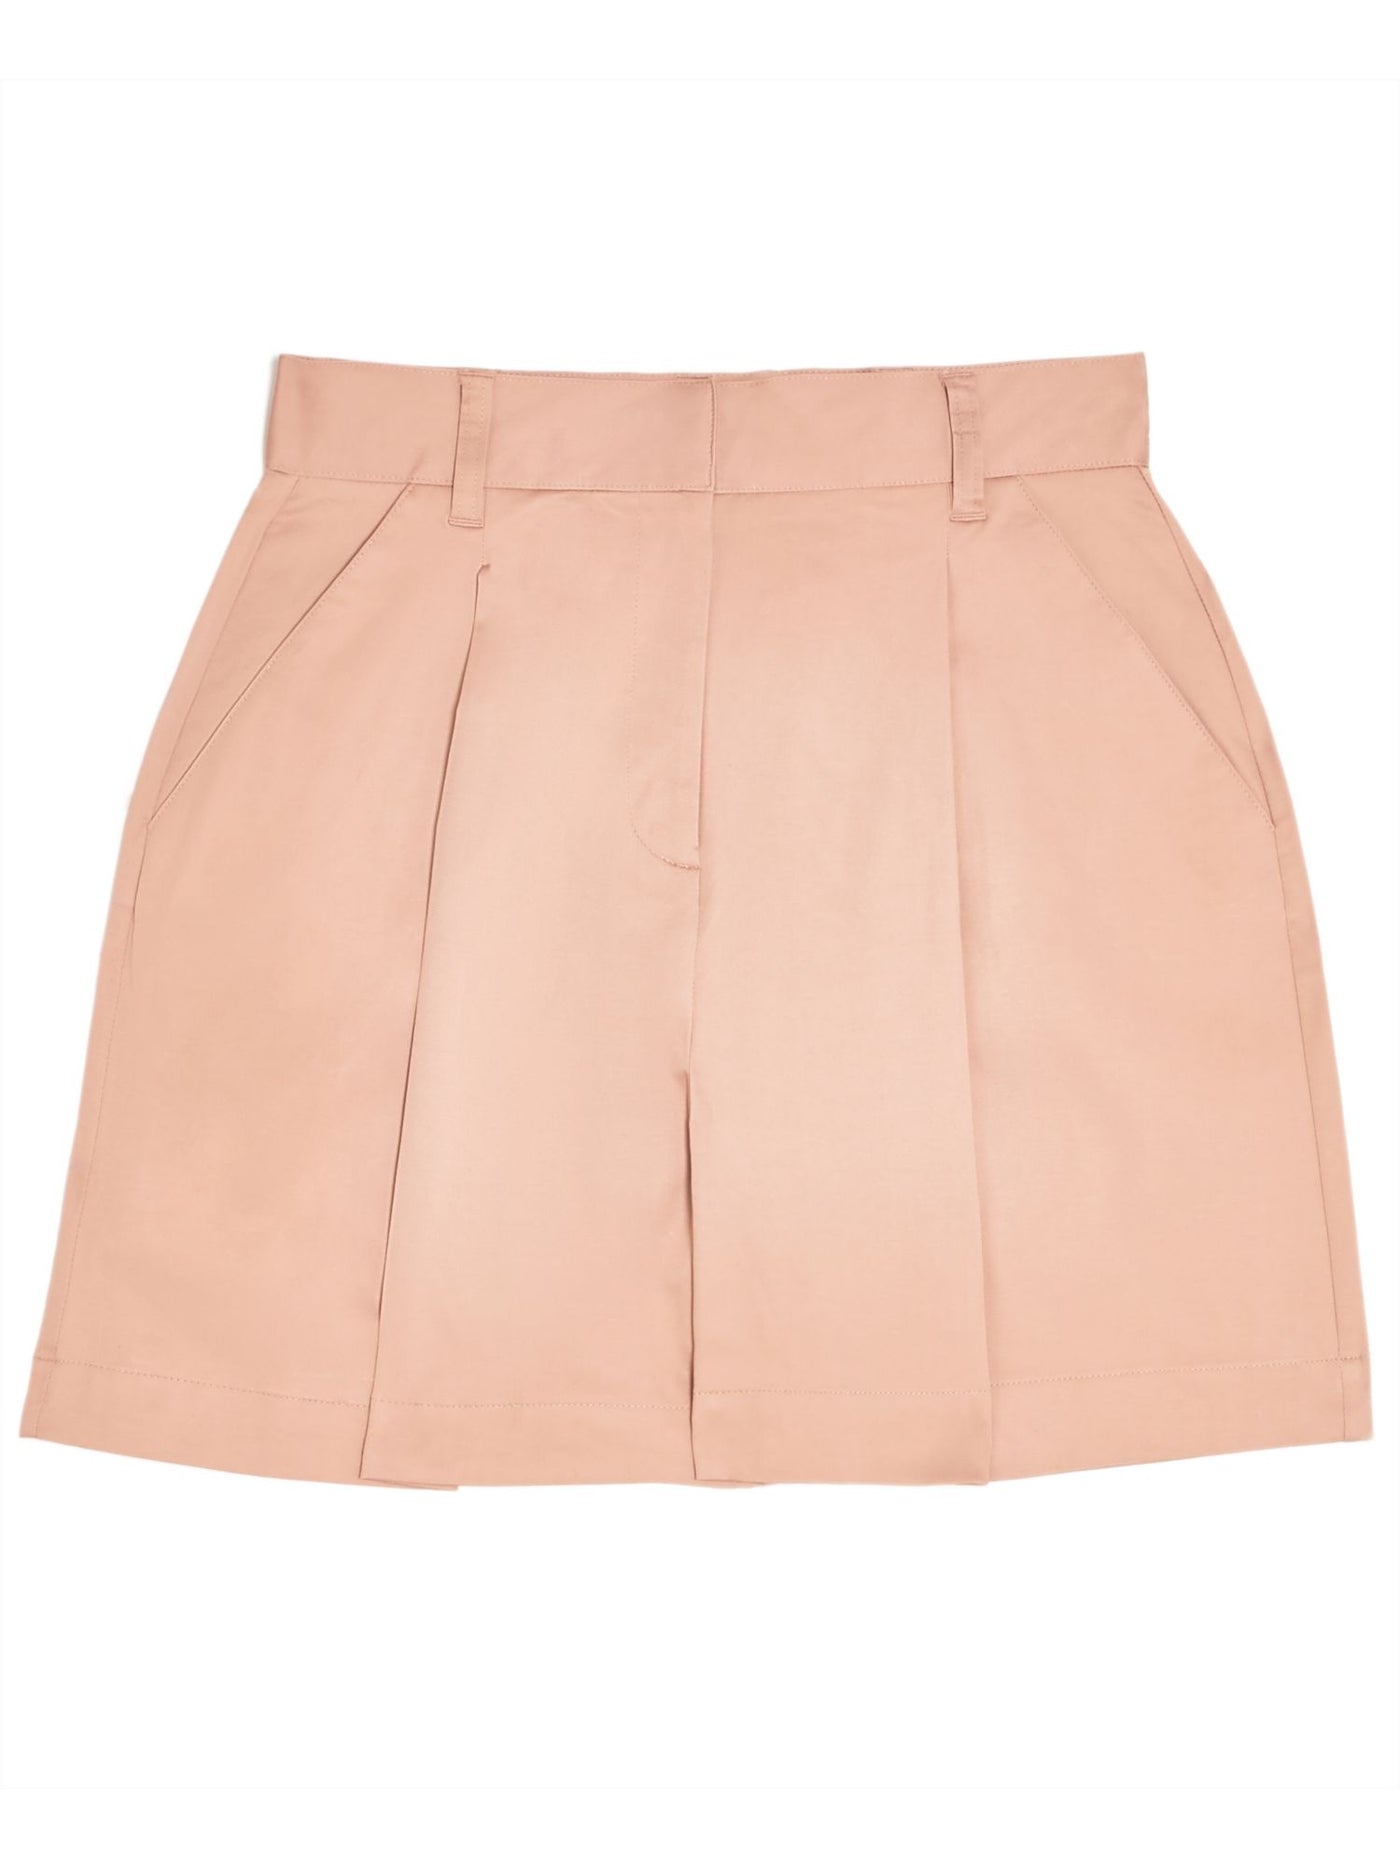 DANIELLE BERNSTEIN Womens Pink Pleated Pocketed Poplin High Waist Shorts 4